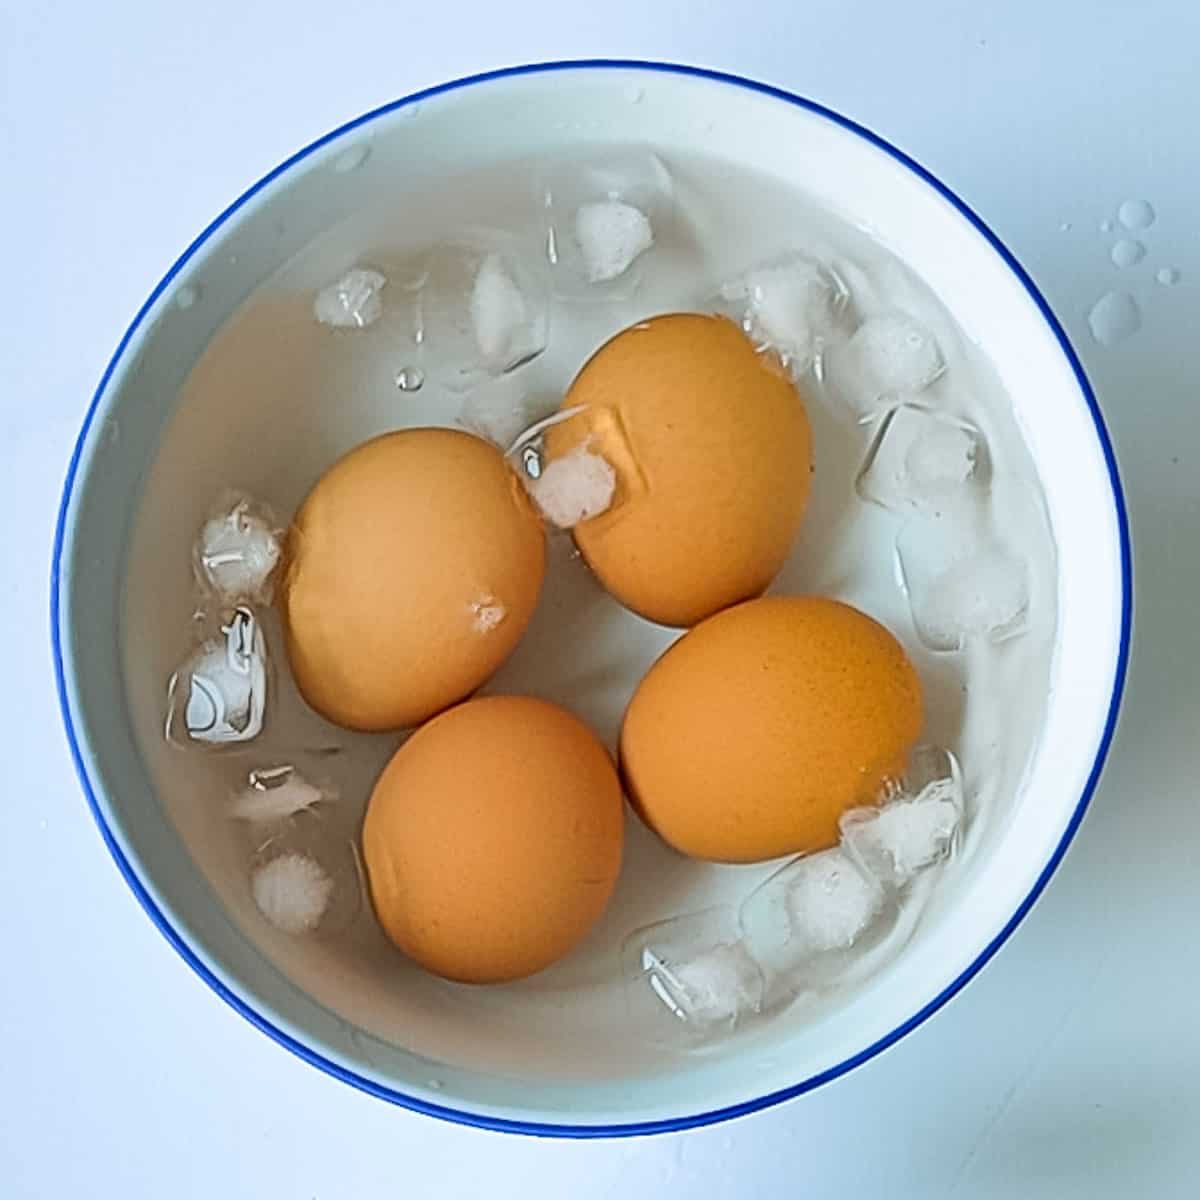 Eggs in ice bath.